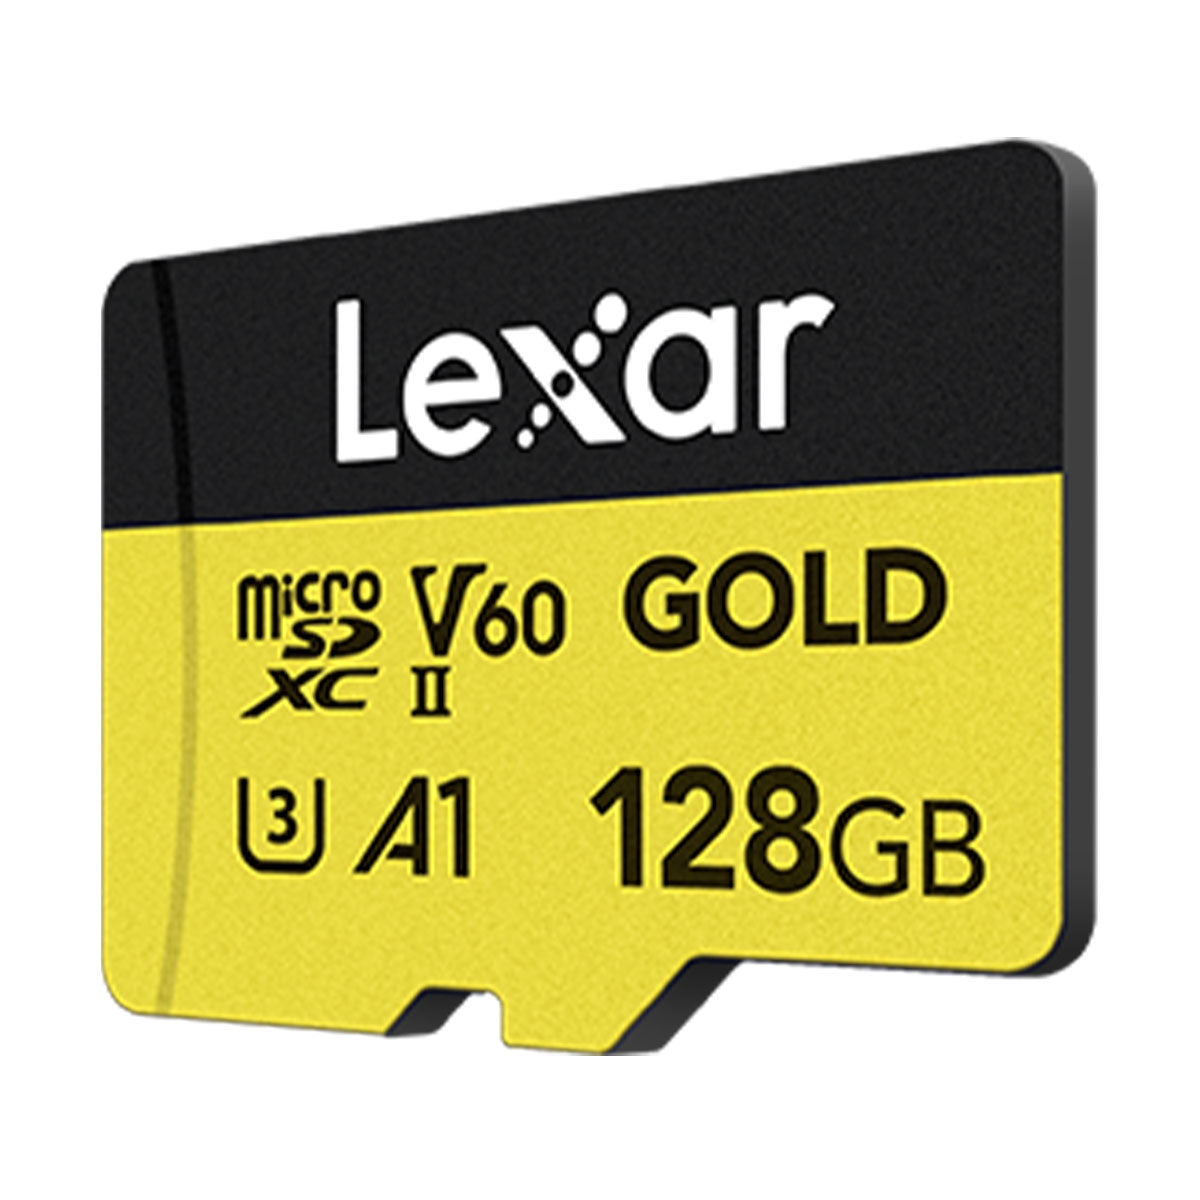 Lexar 128GB Professional GOLD UHS-II microSDXC (V60) Memory Card